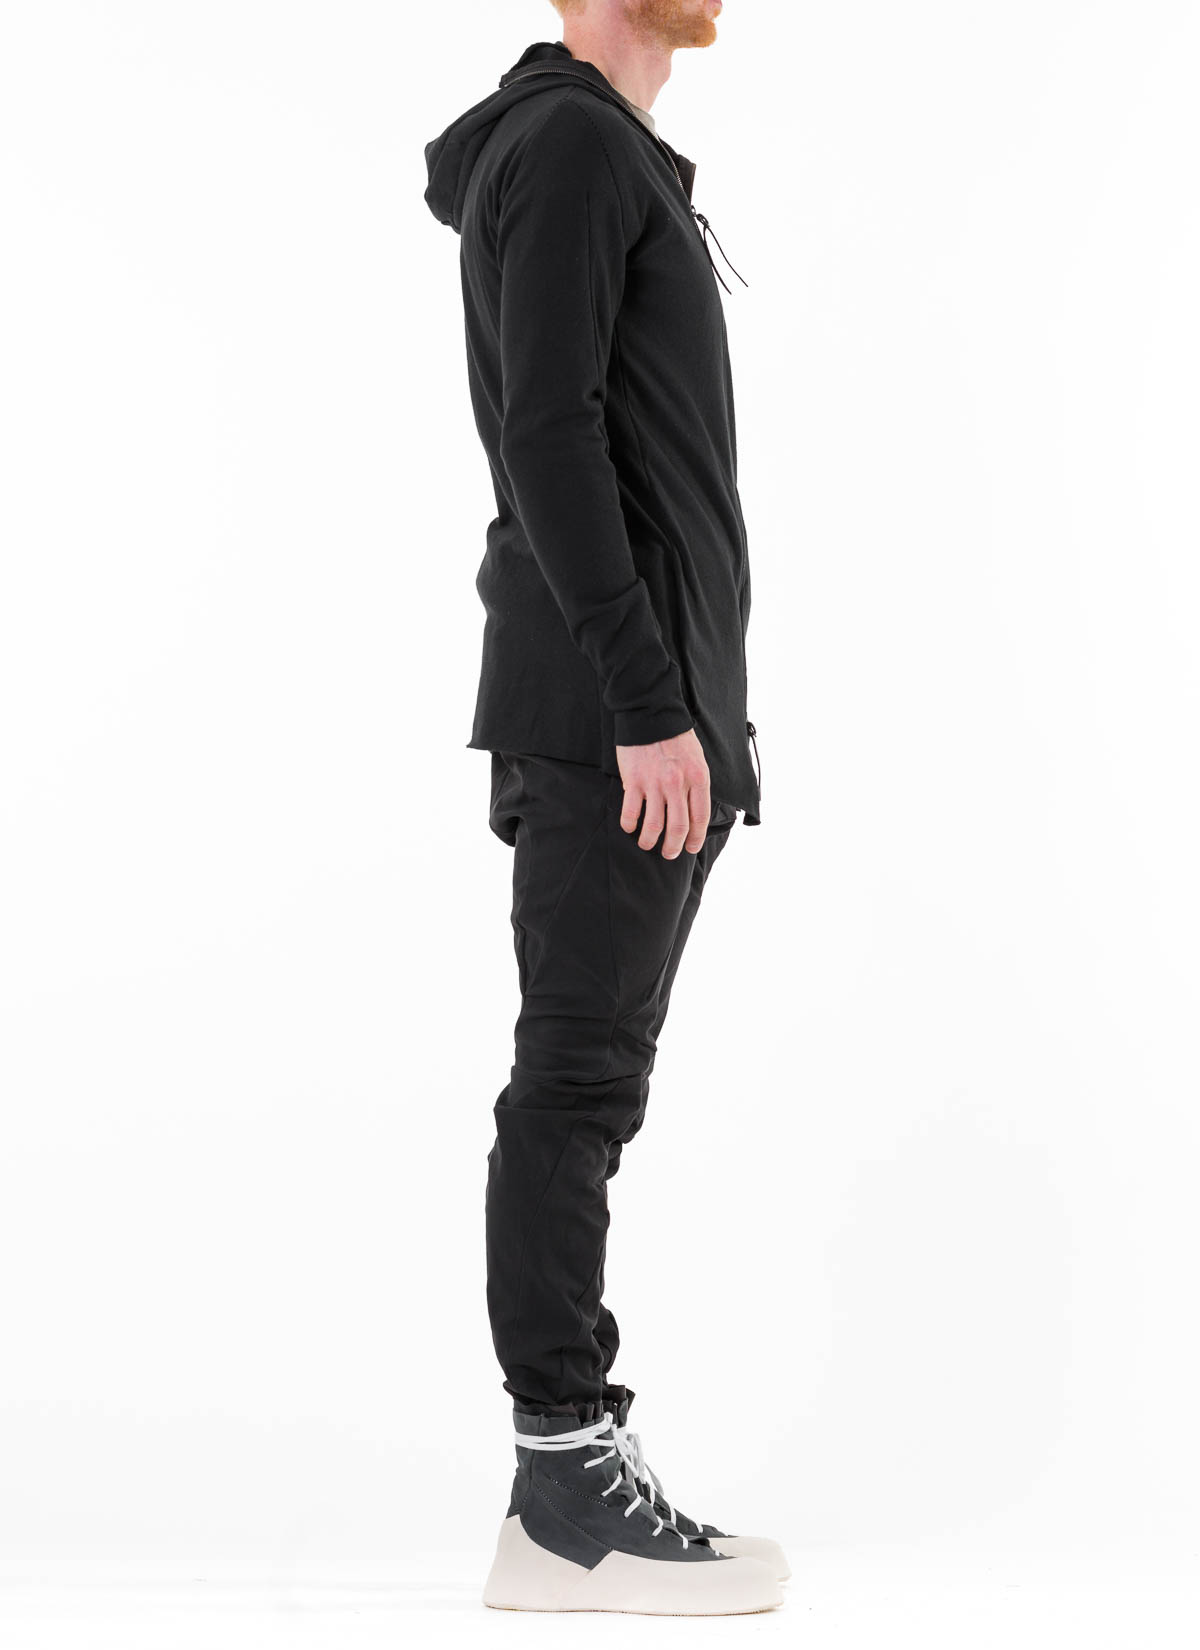 hide-m | LEON EMANUEL BLANCK Zipped Hoody Jacket, black cotton/ea